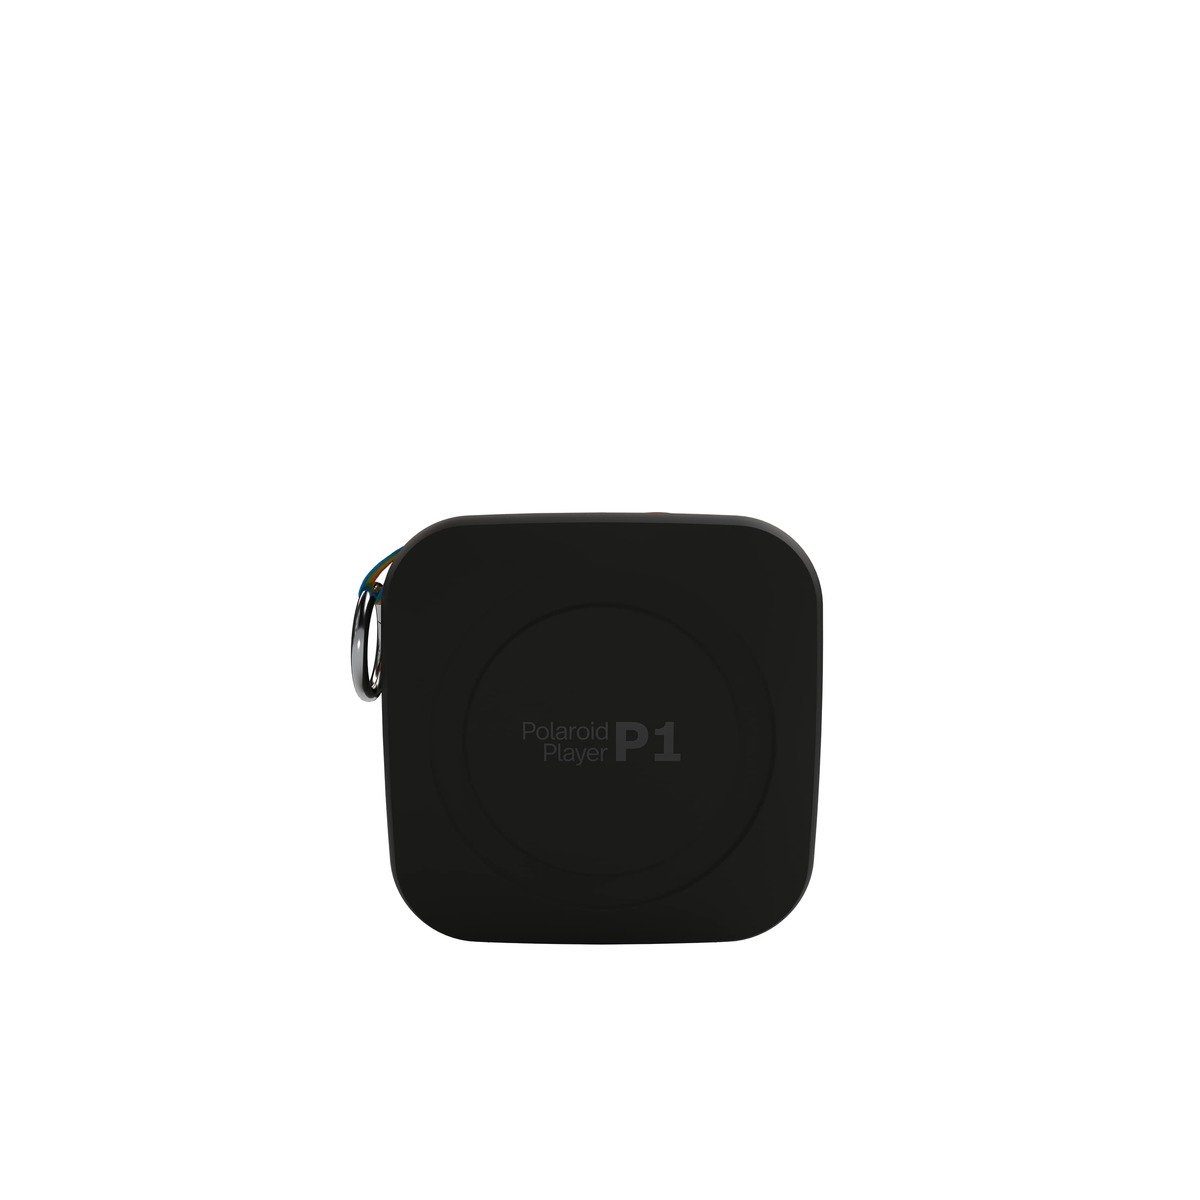 Polaroid Originals P1 Wireless Player Black Lautsprecher Music